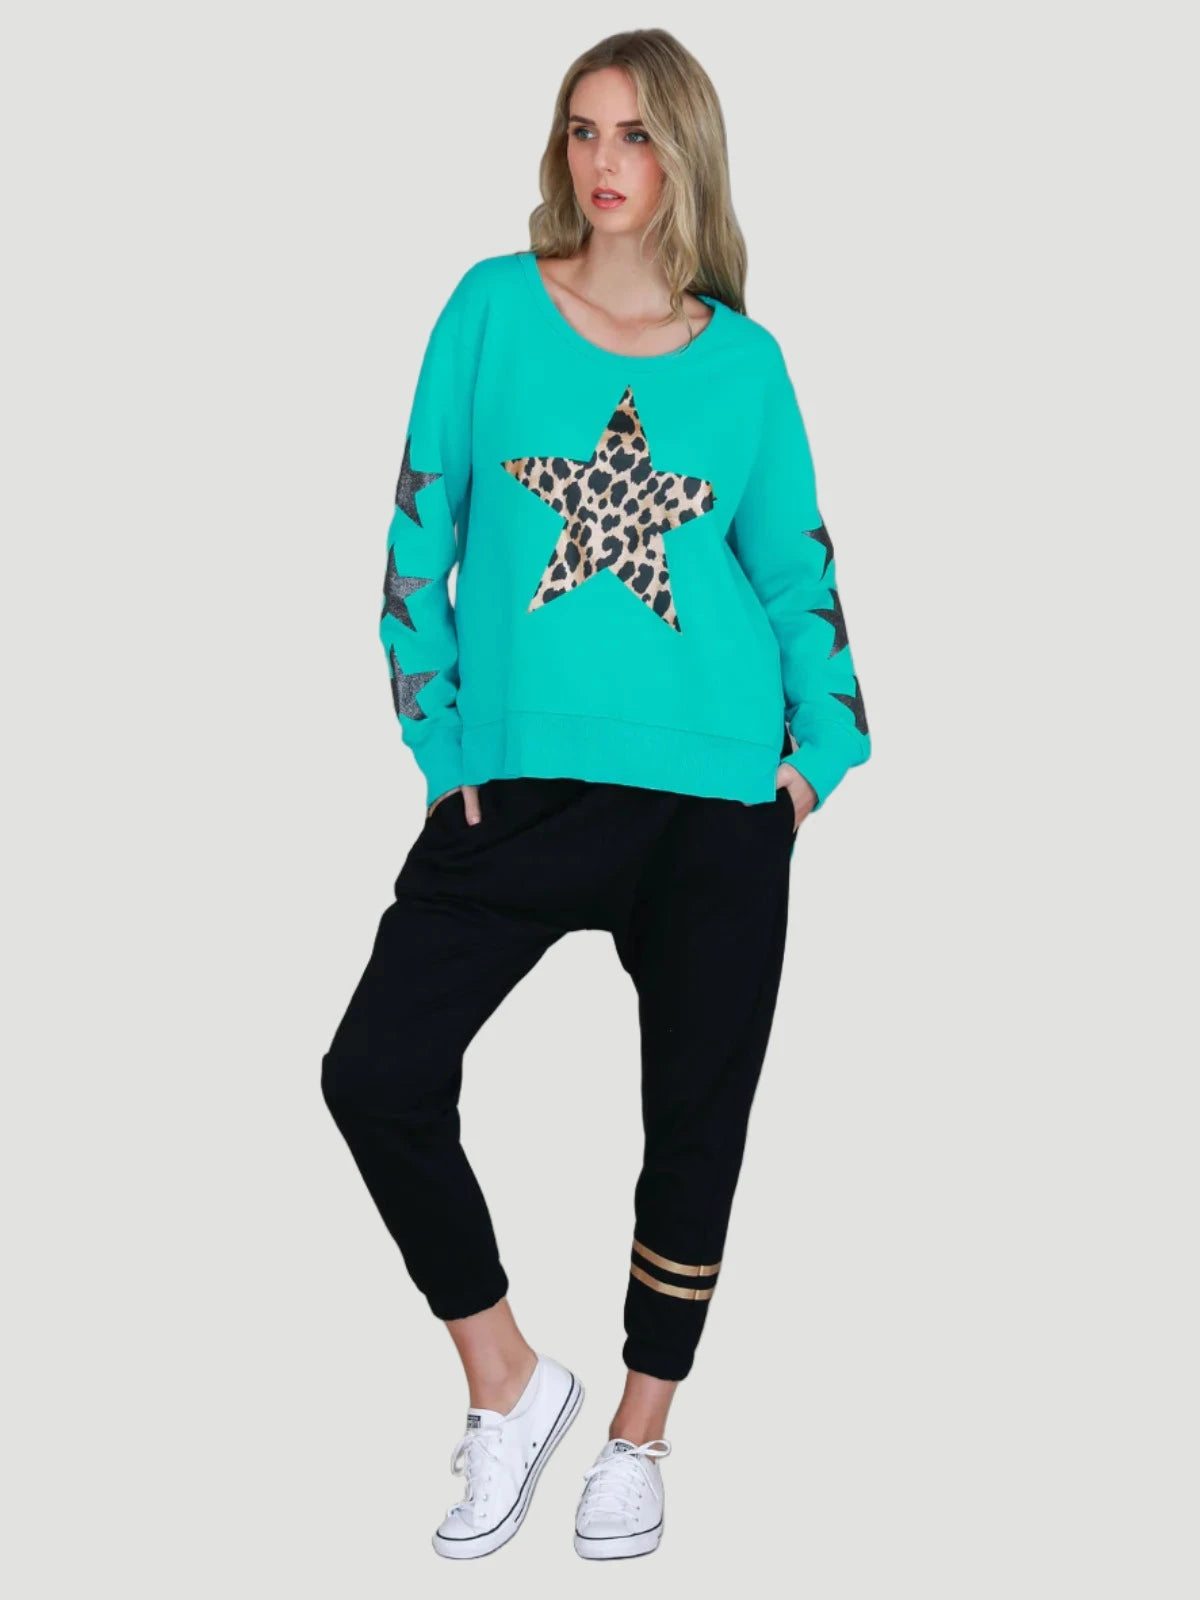 Sydney Leopard Star Sweater - Aquatic